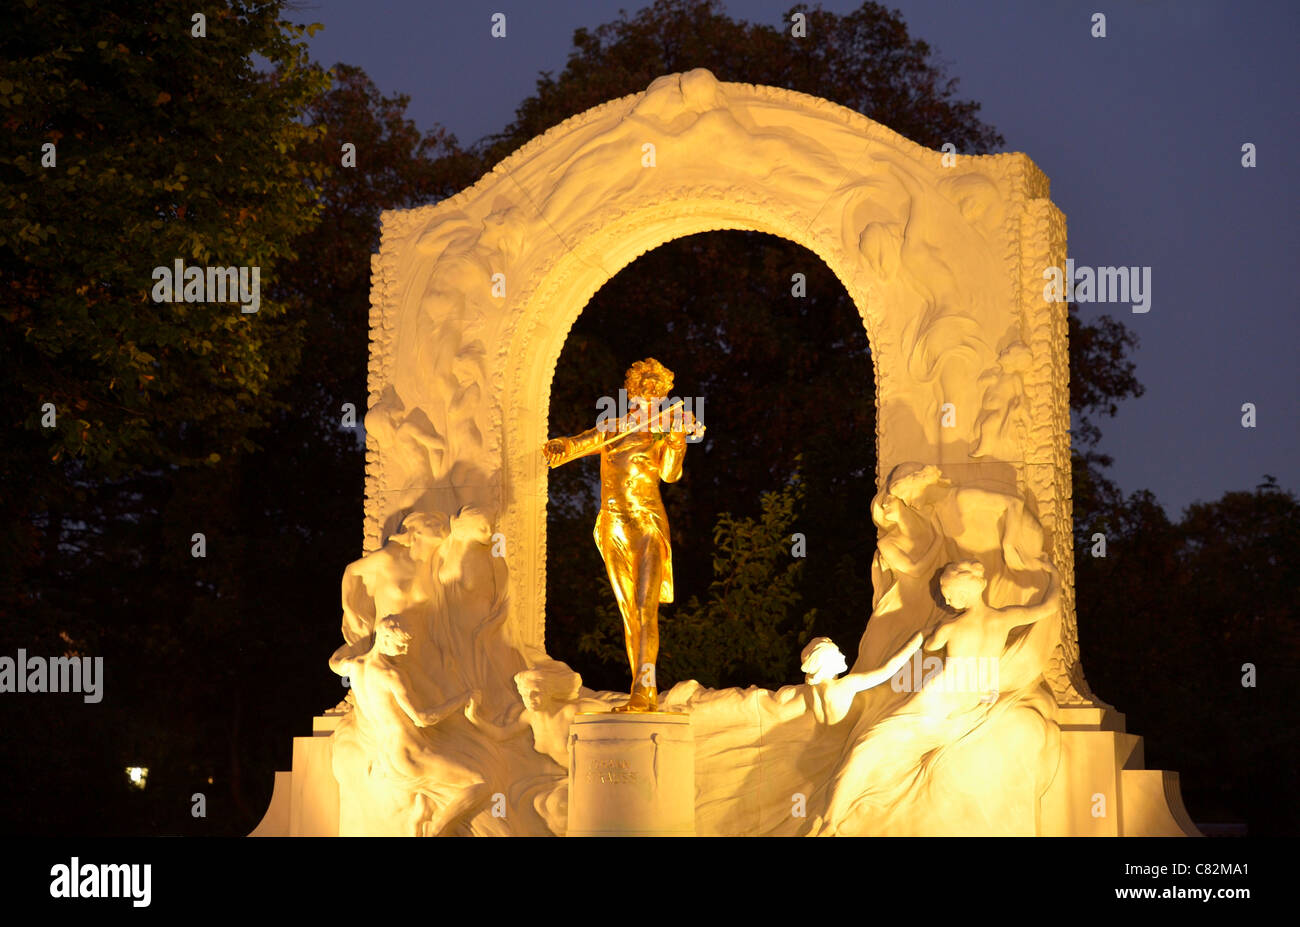 The Johann Strauss II memorial at the city park, Vienna AT Stock Photo